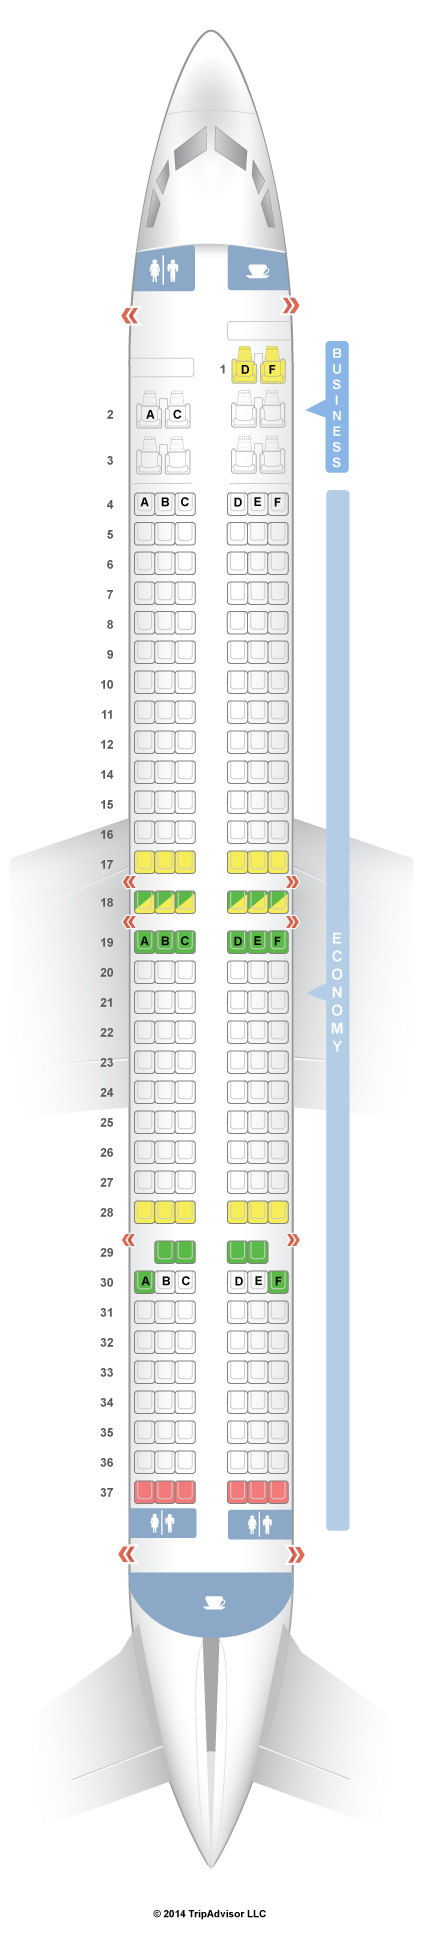 Boeing 737 900er Seating Chart